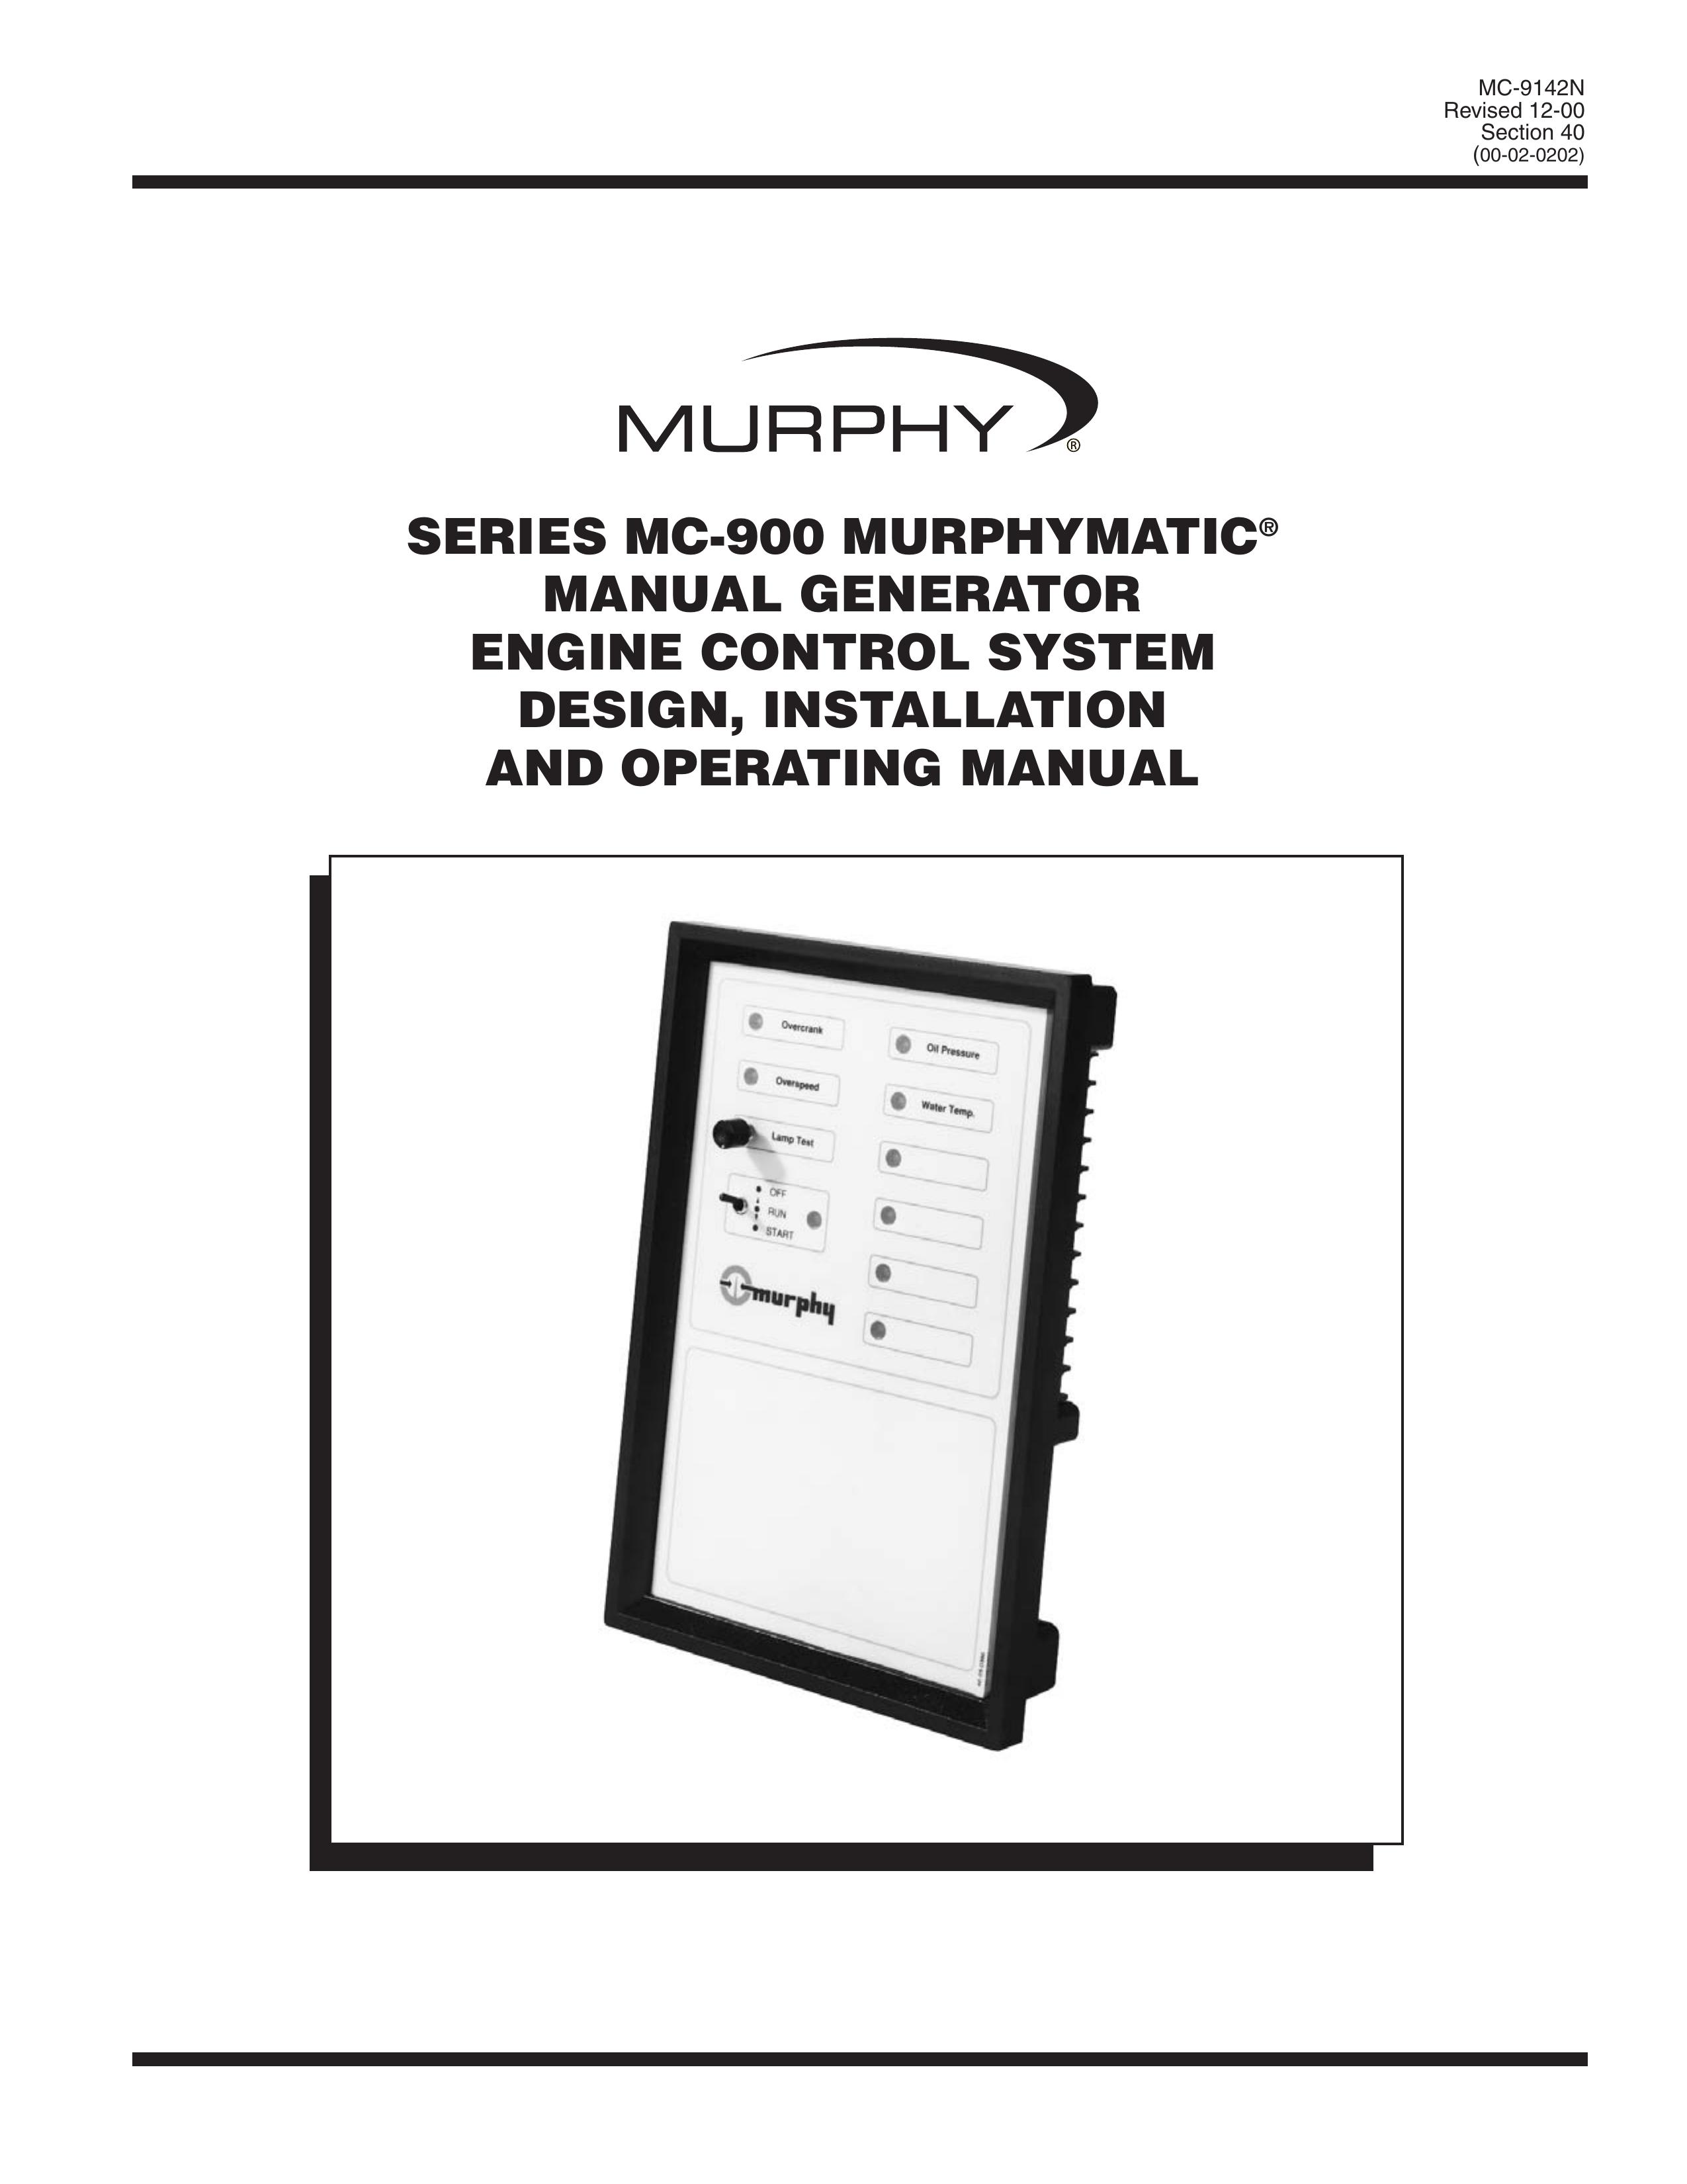 Murphy MC-900 Series Portable Generator User Manual